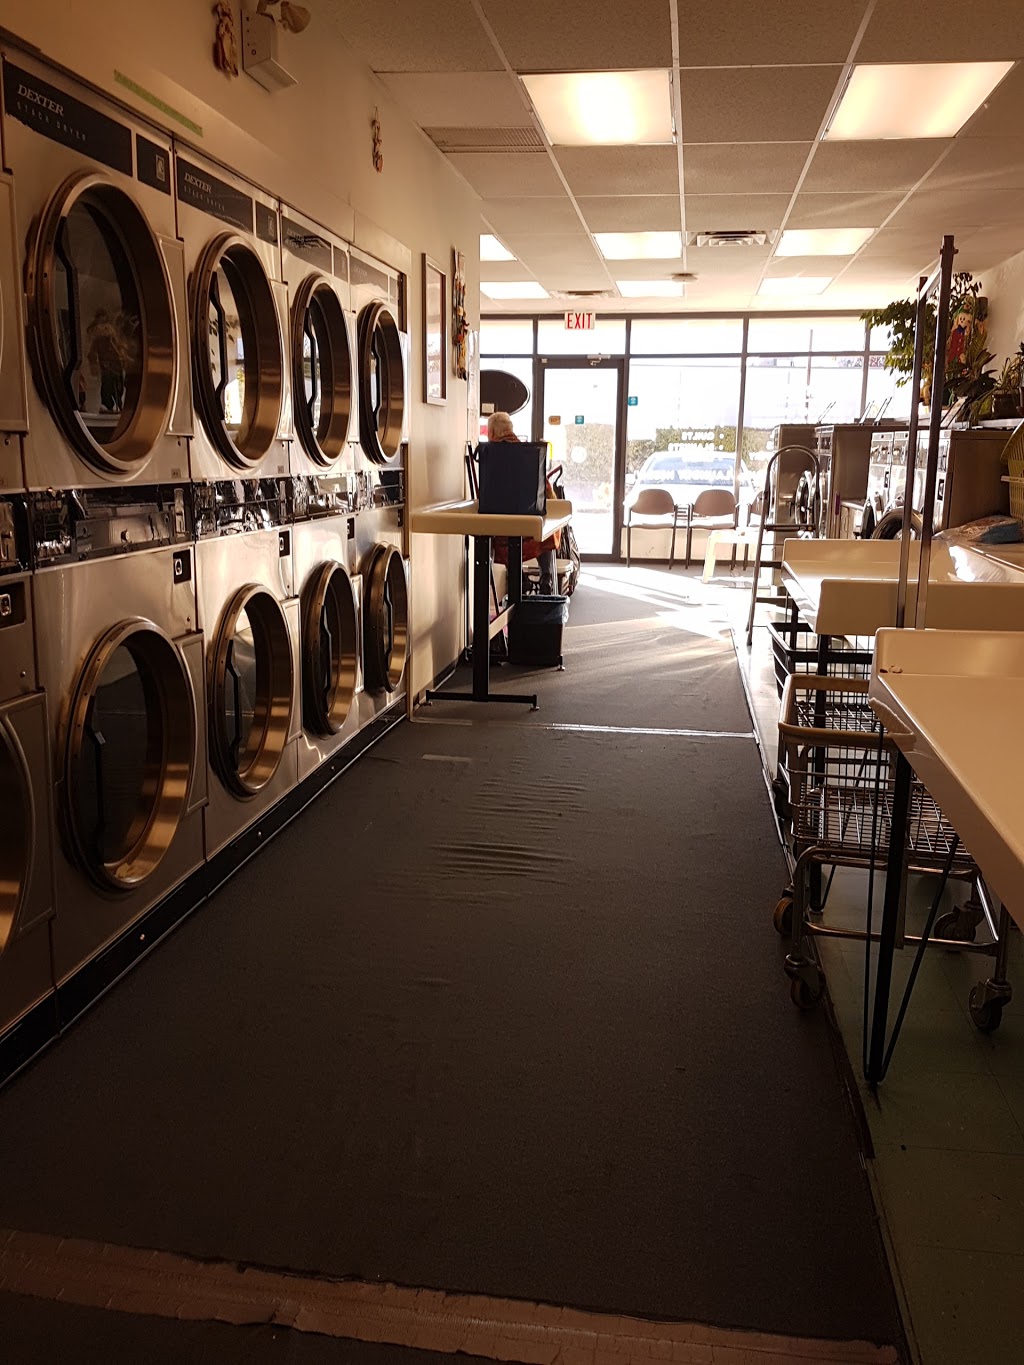 Sardis Soap N Sudz Laundromat | laundry | 45428 Luckakuck Way, Chilliwack, BC V2R 3S9, Canada | 6048249884 OR +1 604-824-9884